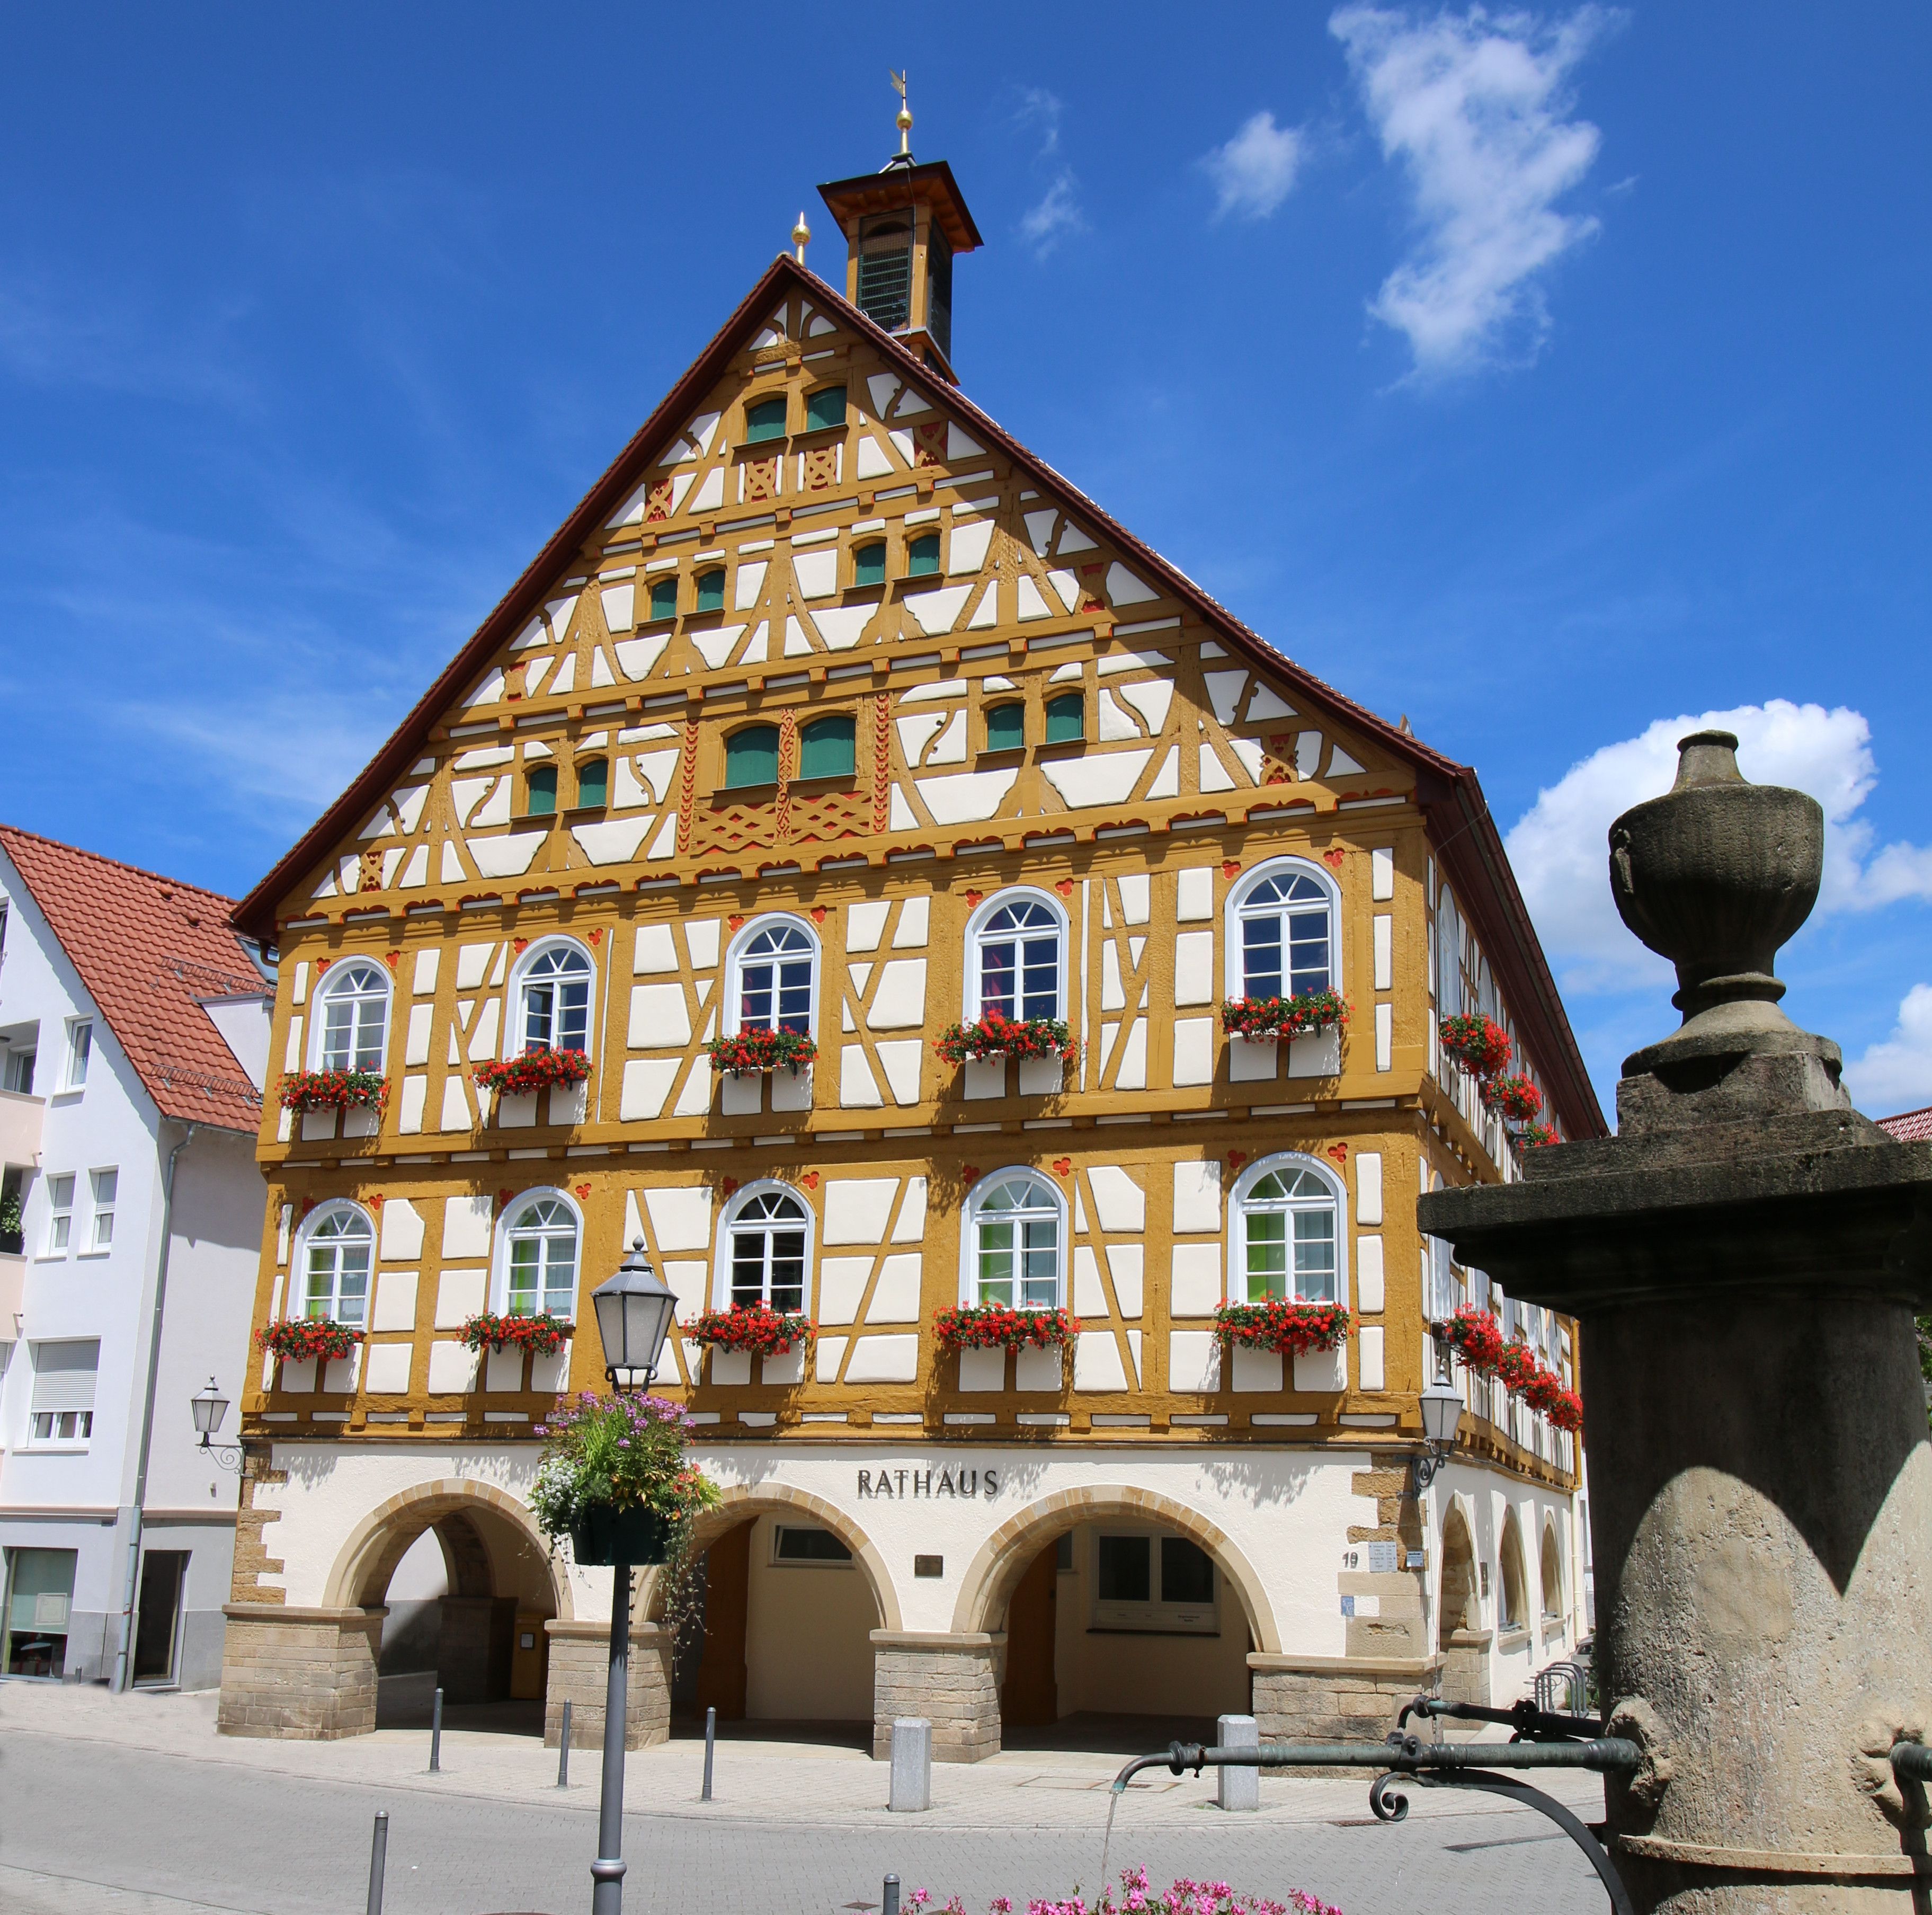 Rathaus Neuffen